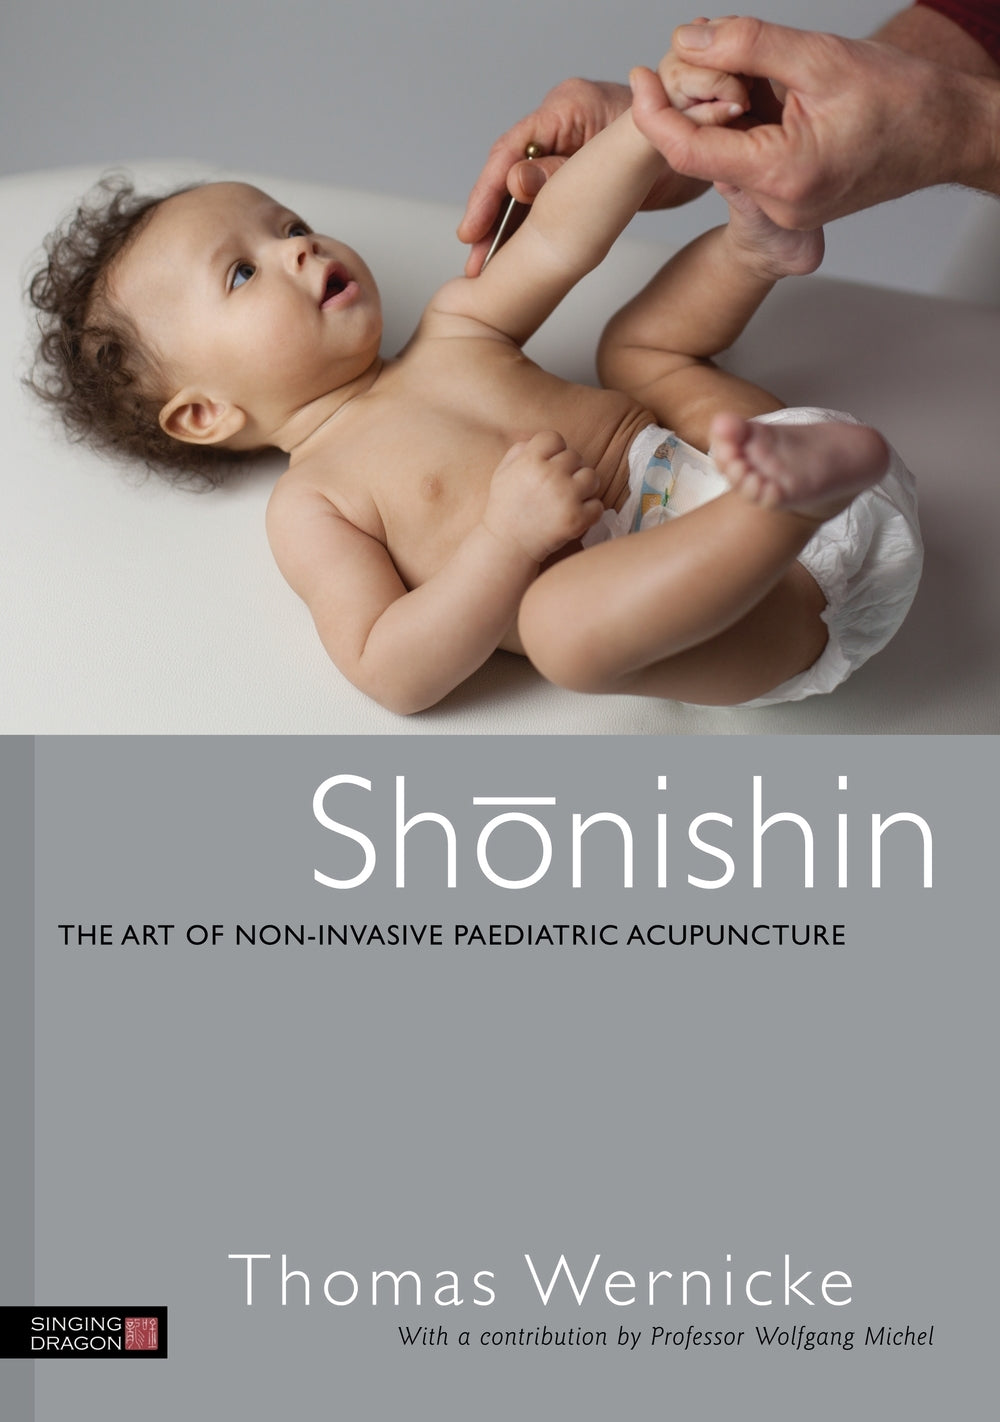 Shonishin by Thomas Wernicke